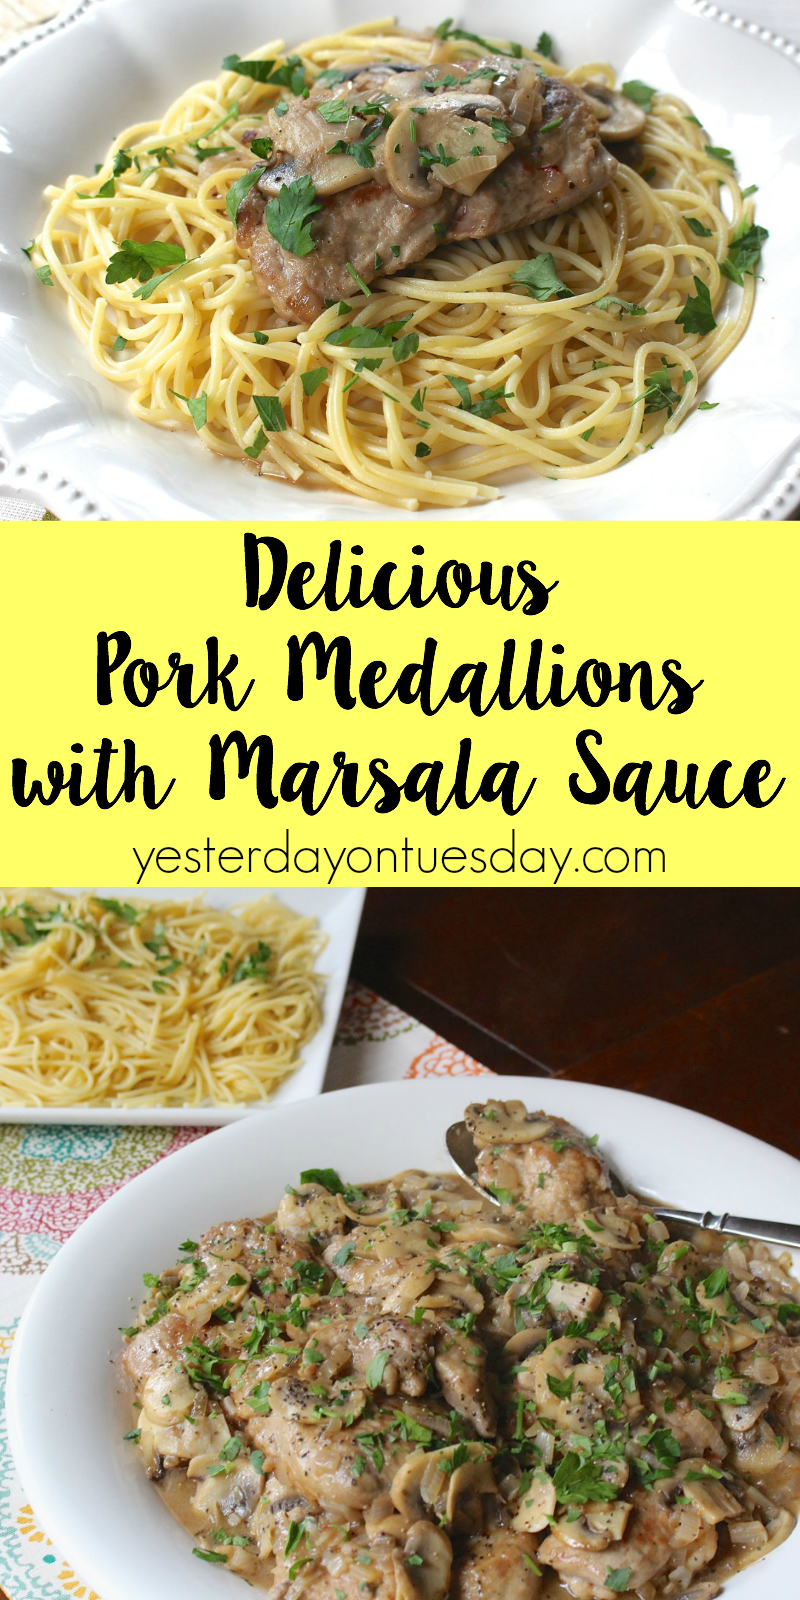 Pork Medallions with Marsala Sauce